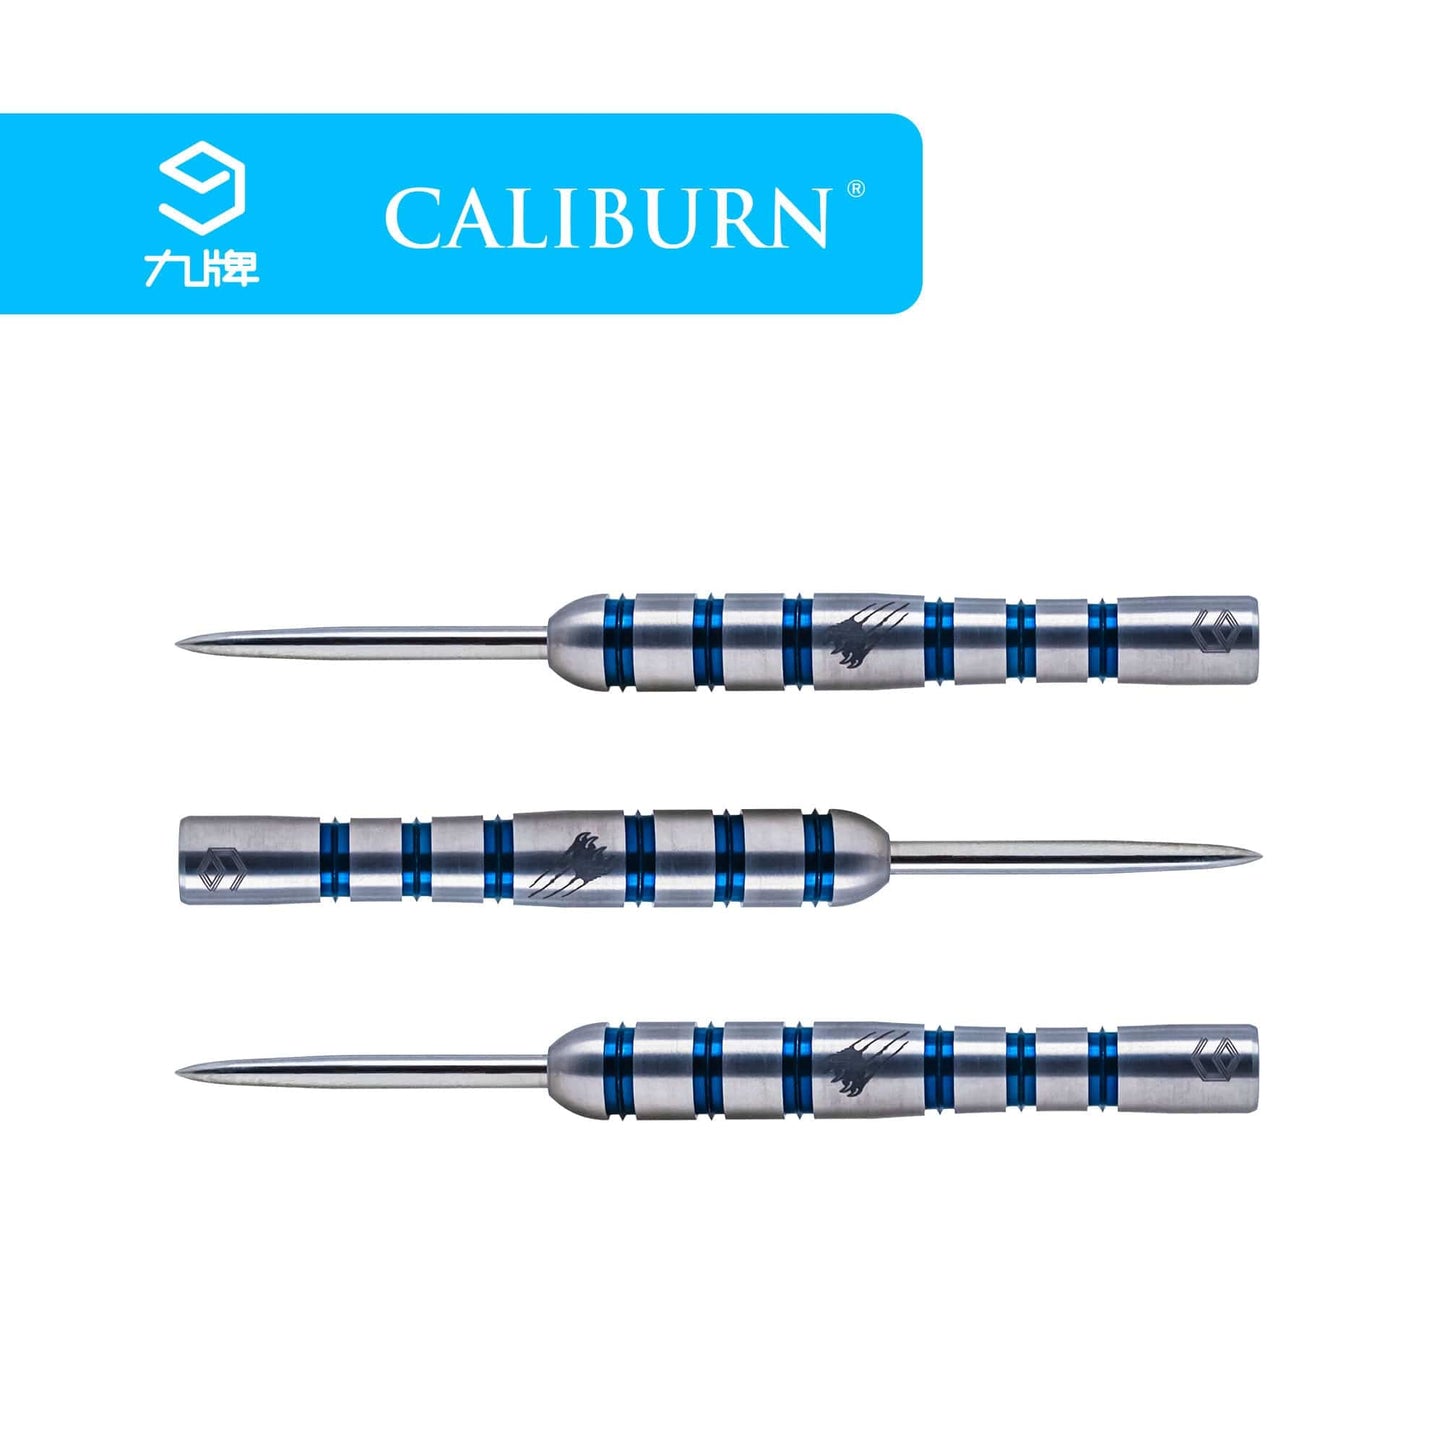 Caliburn Player Darts - Steel Tip - 90% - Blue Ring - Ice Cat 22g